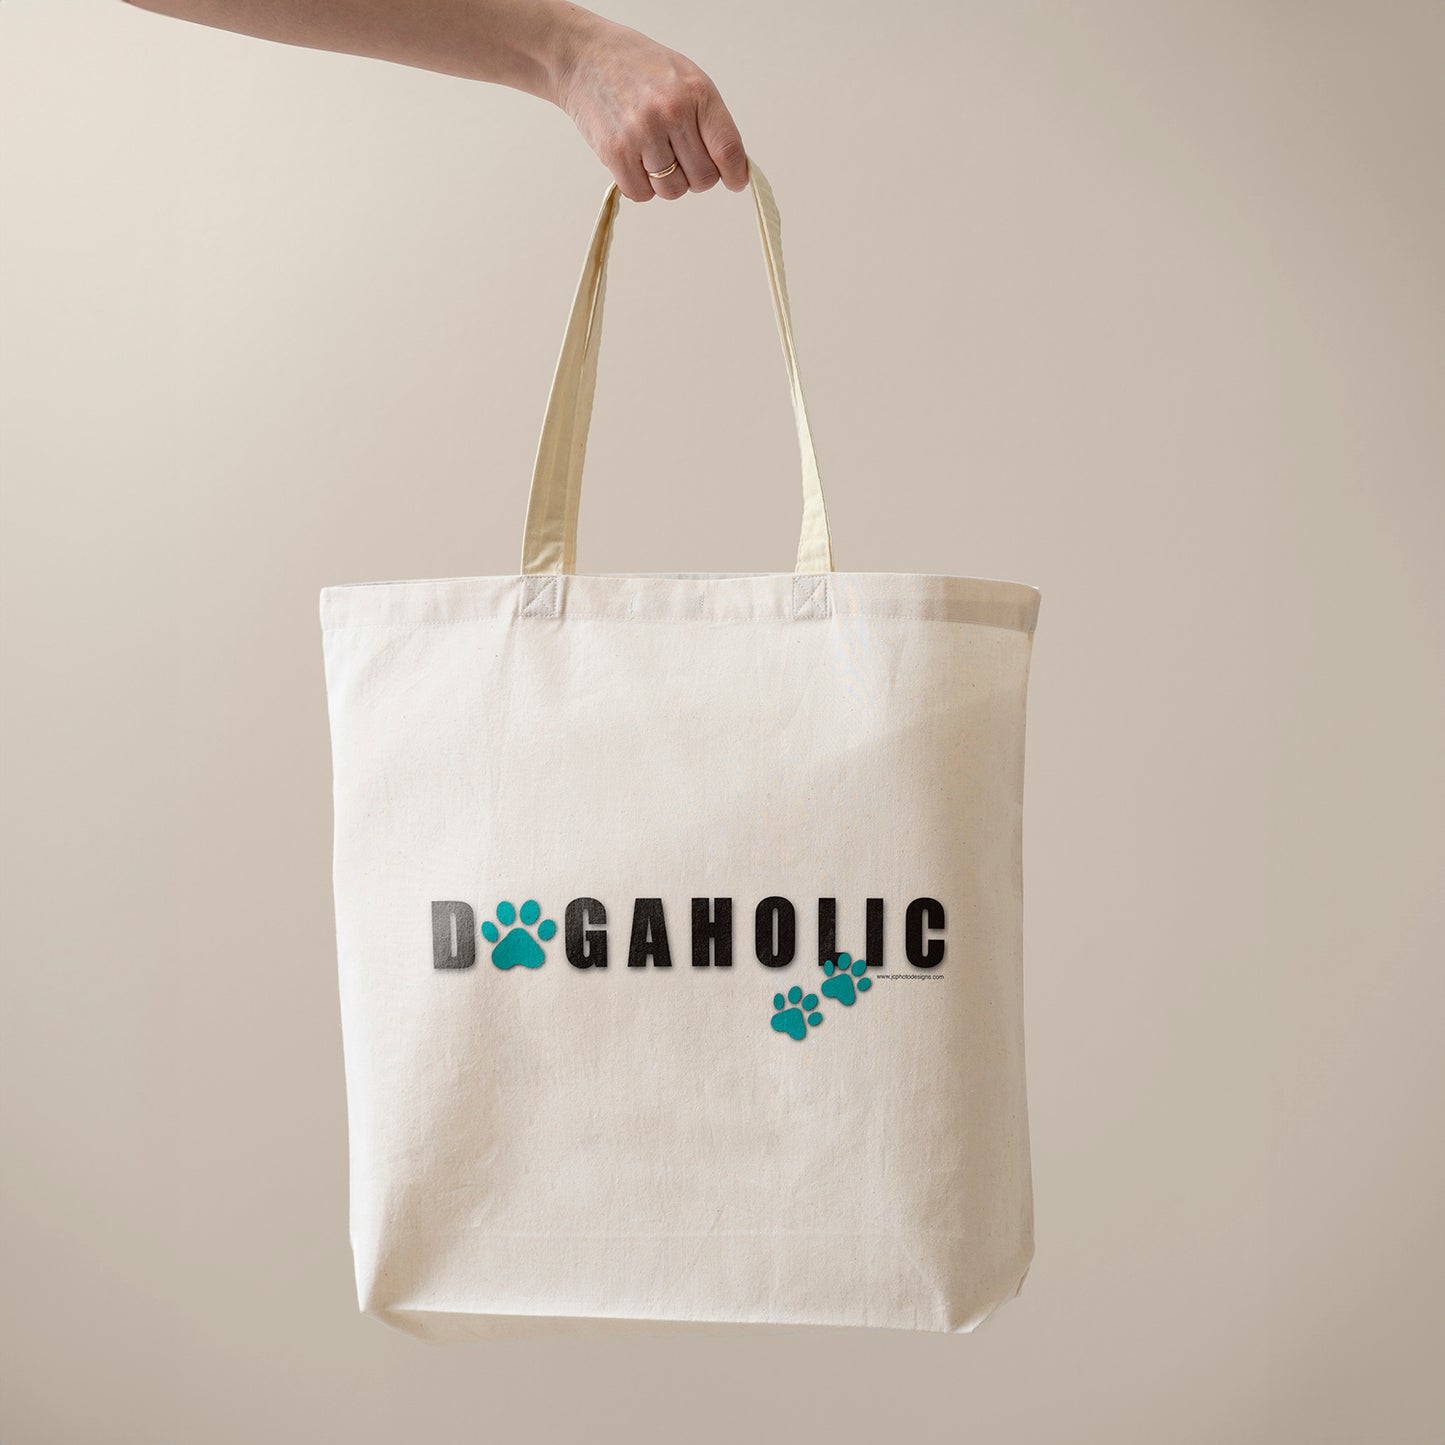 'Dogaholic' Canvas Tote Bag